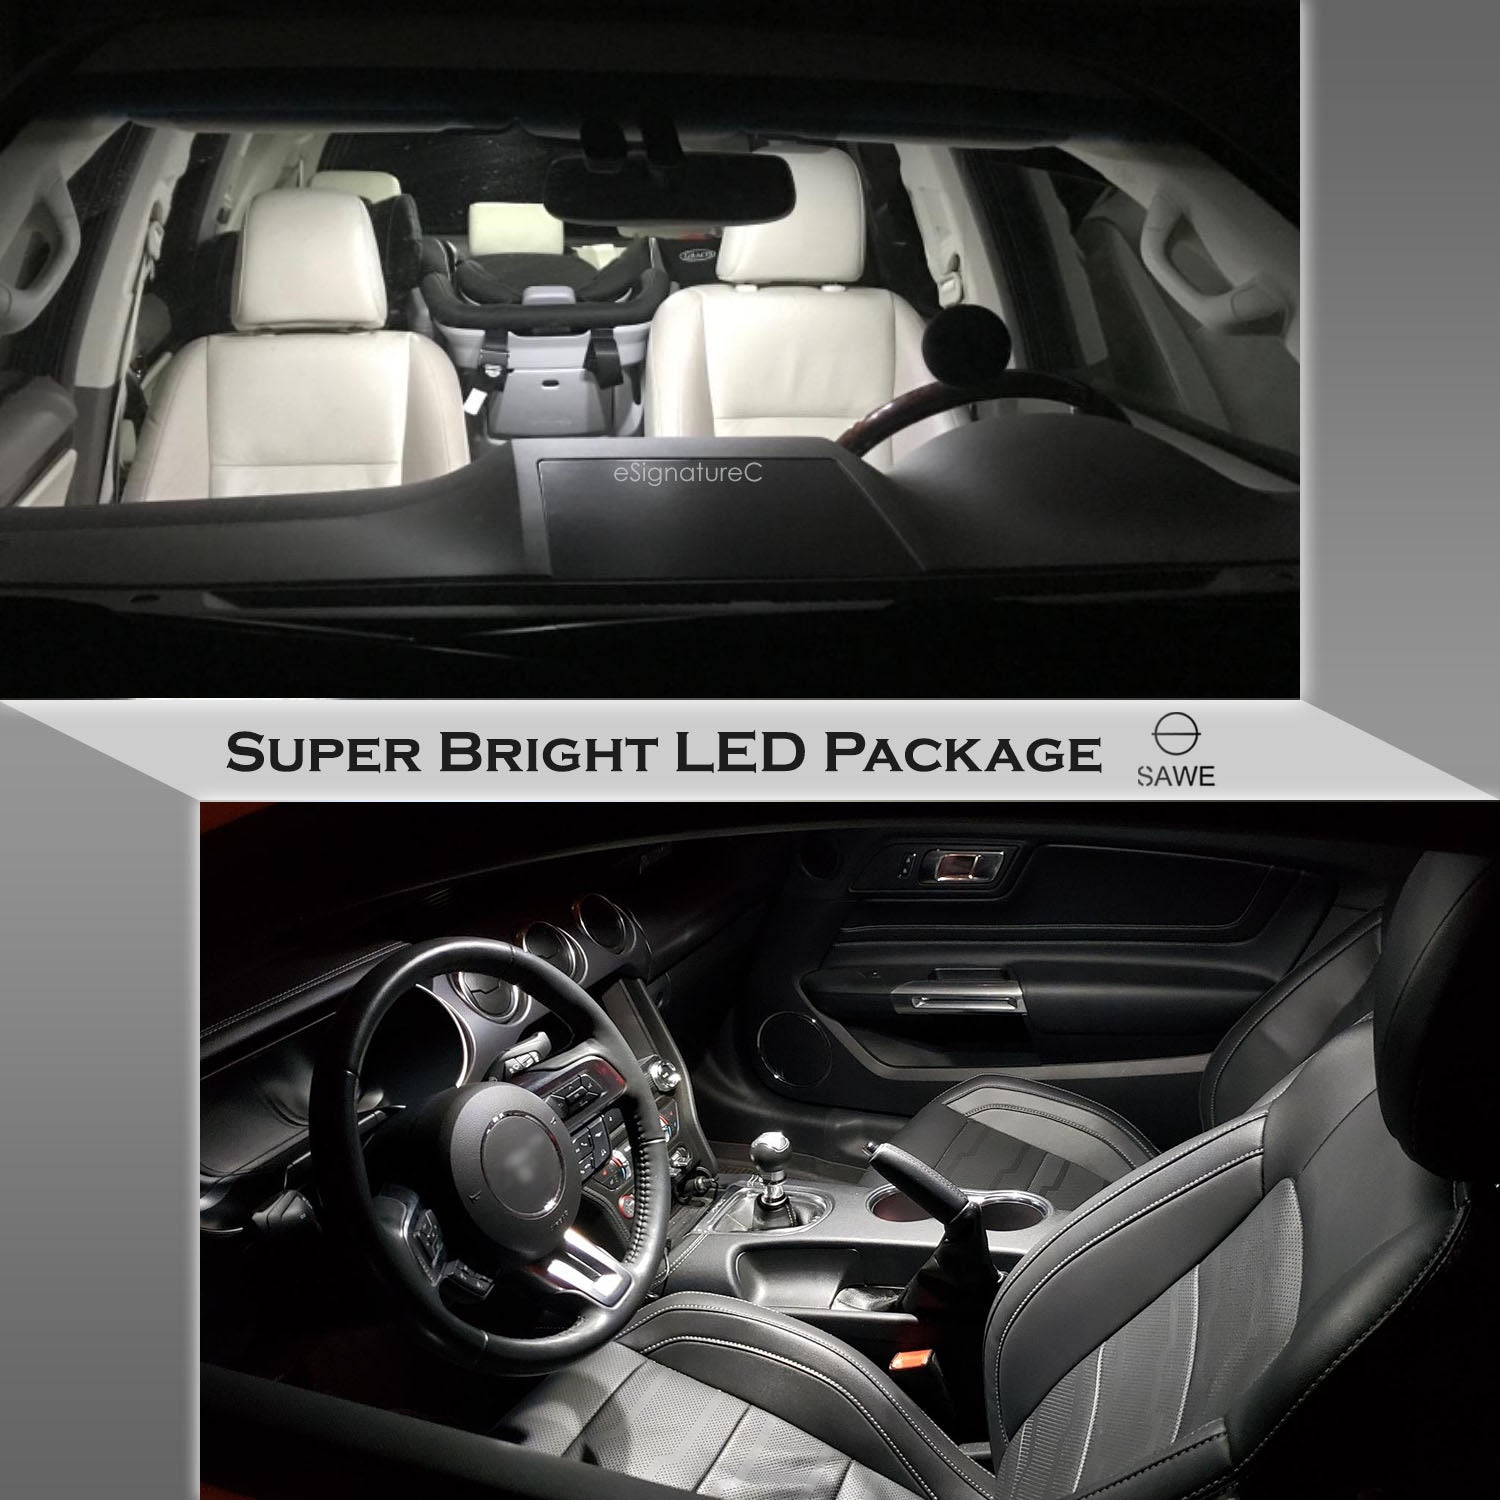 For Nissan NV200 Interior LED Lights - Dome & Map Light Bulbs Package Kit for 2013 - 2019 - White